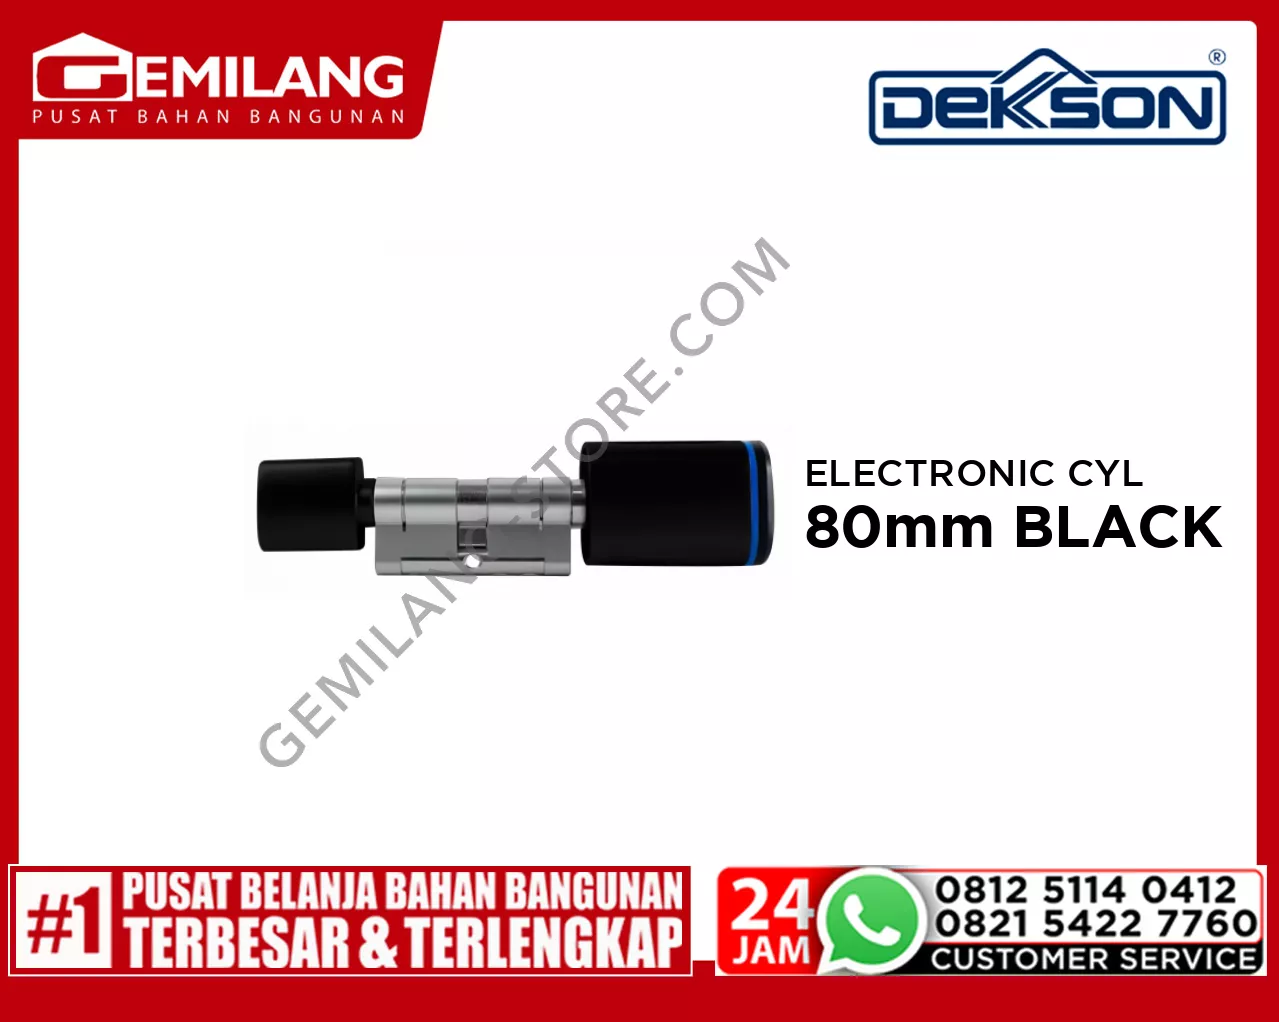 DEKKSON ELECTRONIC CYLINDER EC D01 80mm BLACK